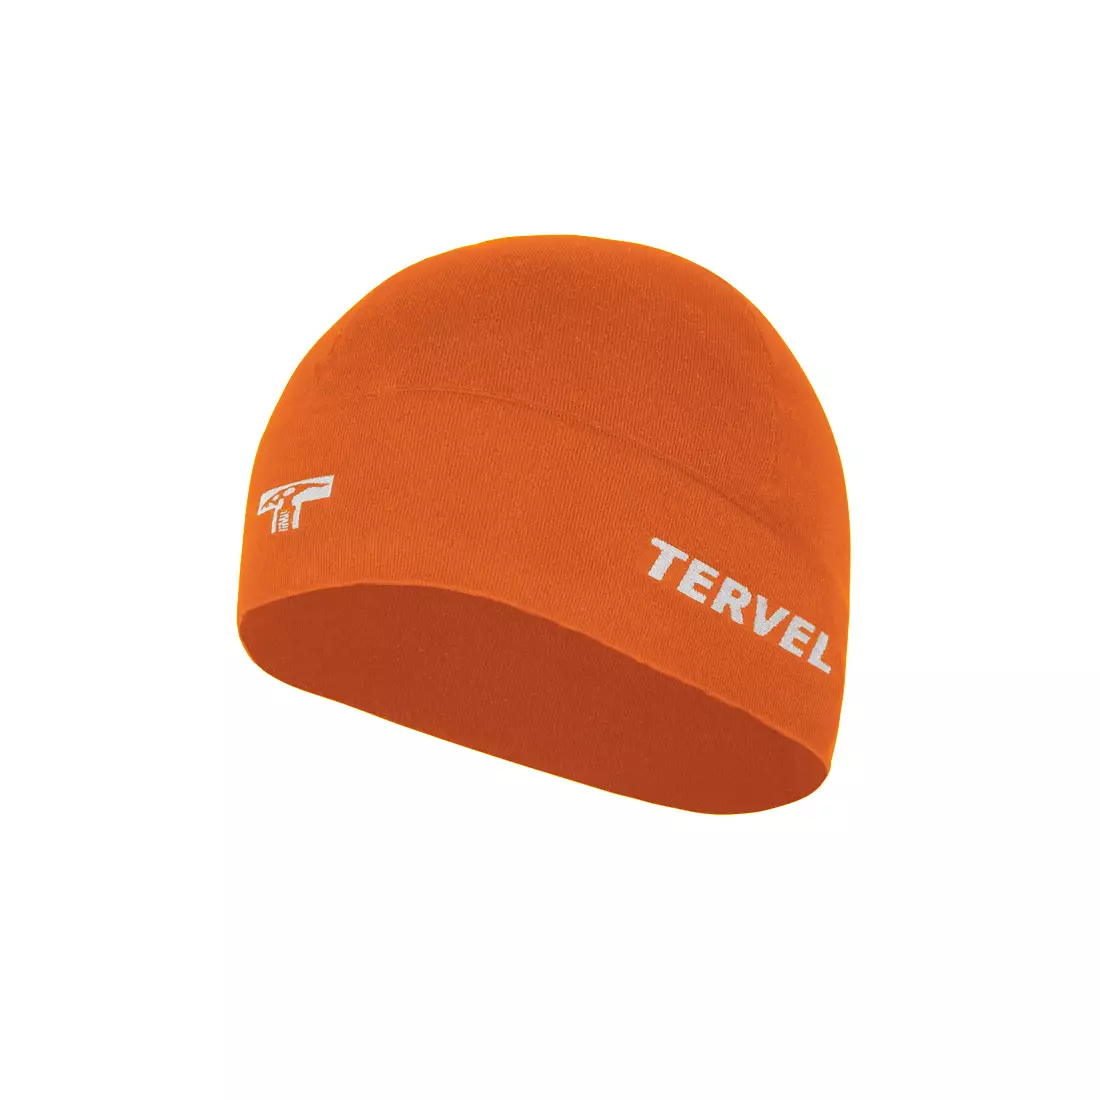 TERVEL 7001 - COMFORTLINE - training cap, color: Orange, size: Universal